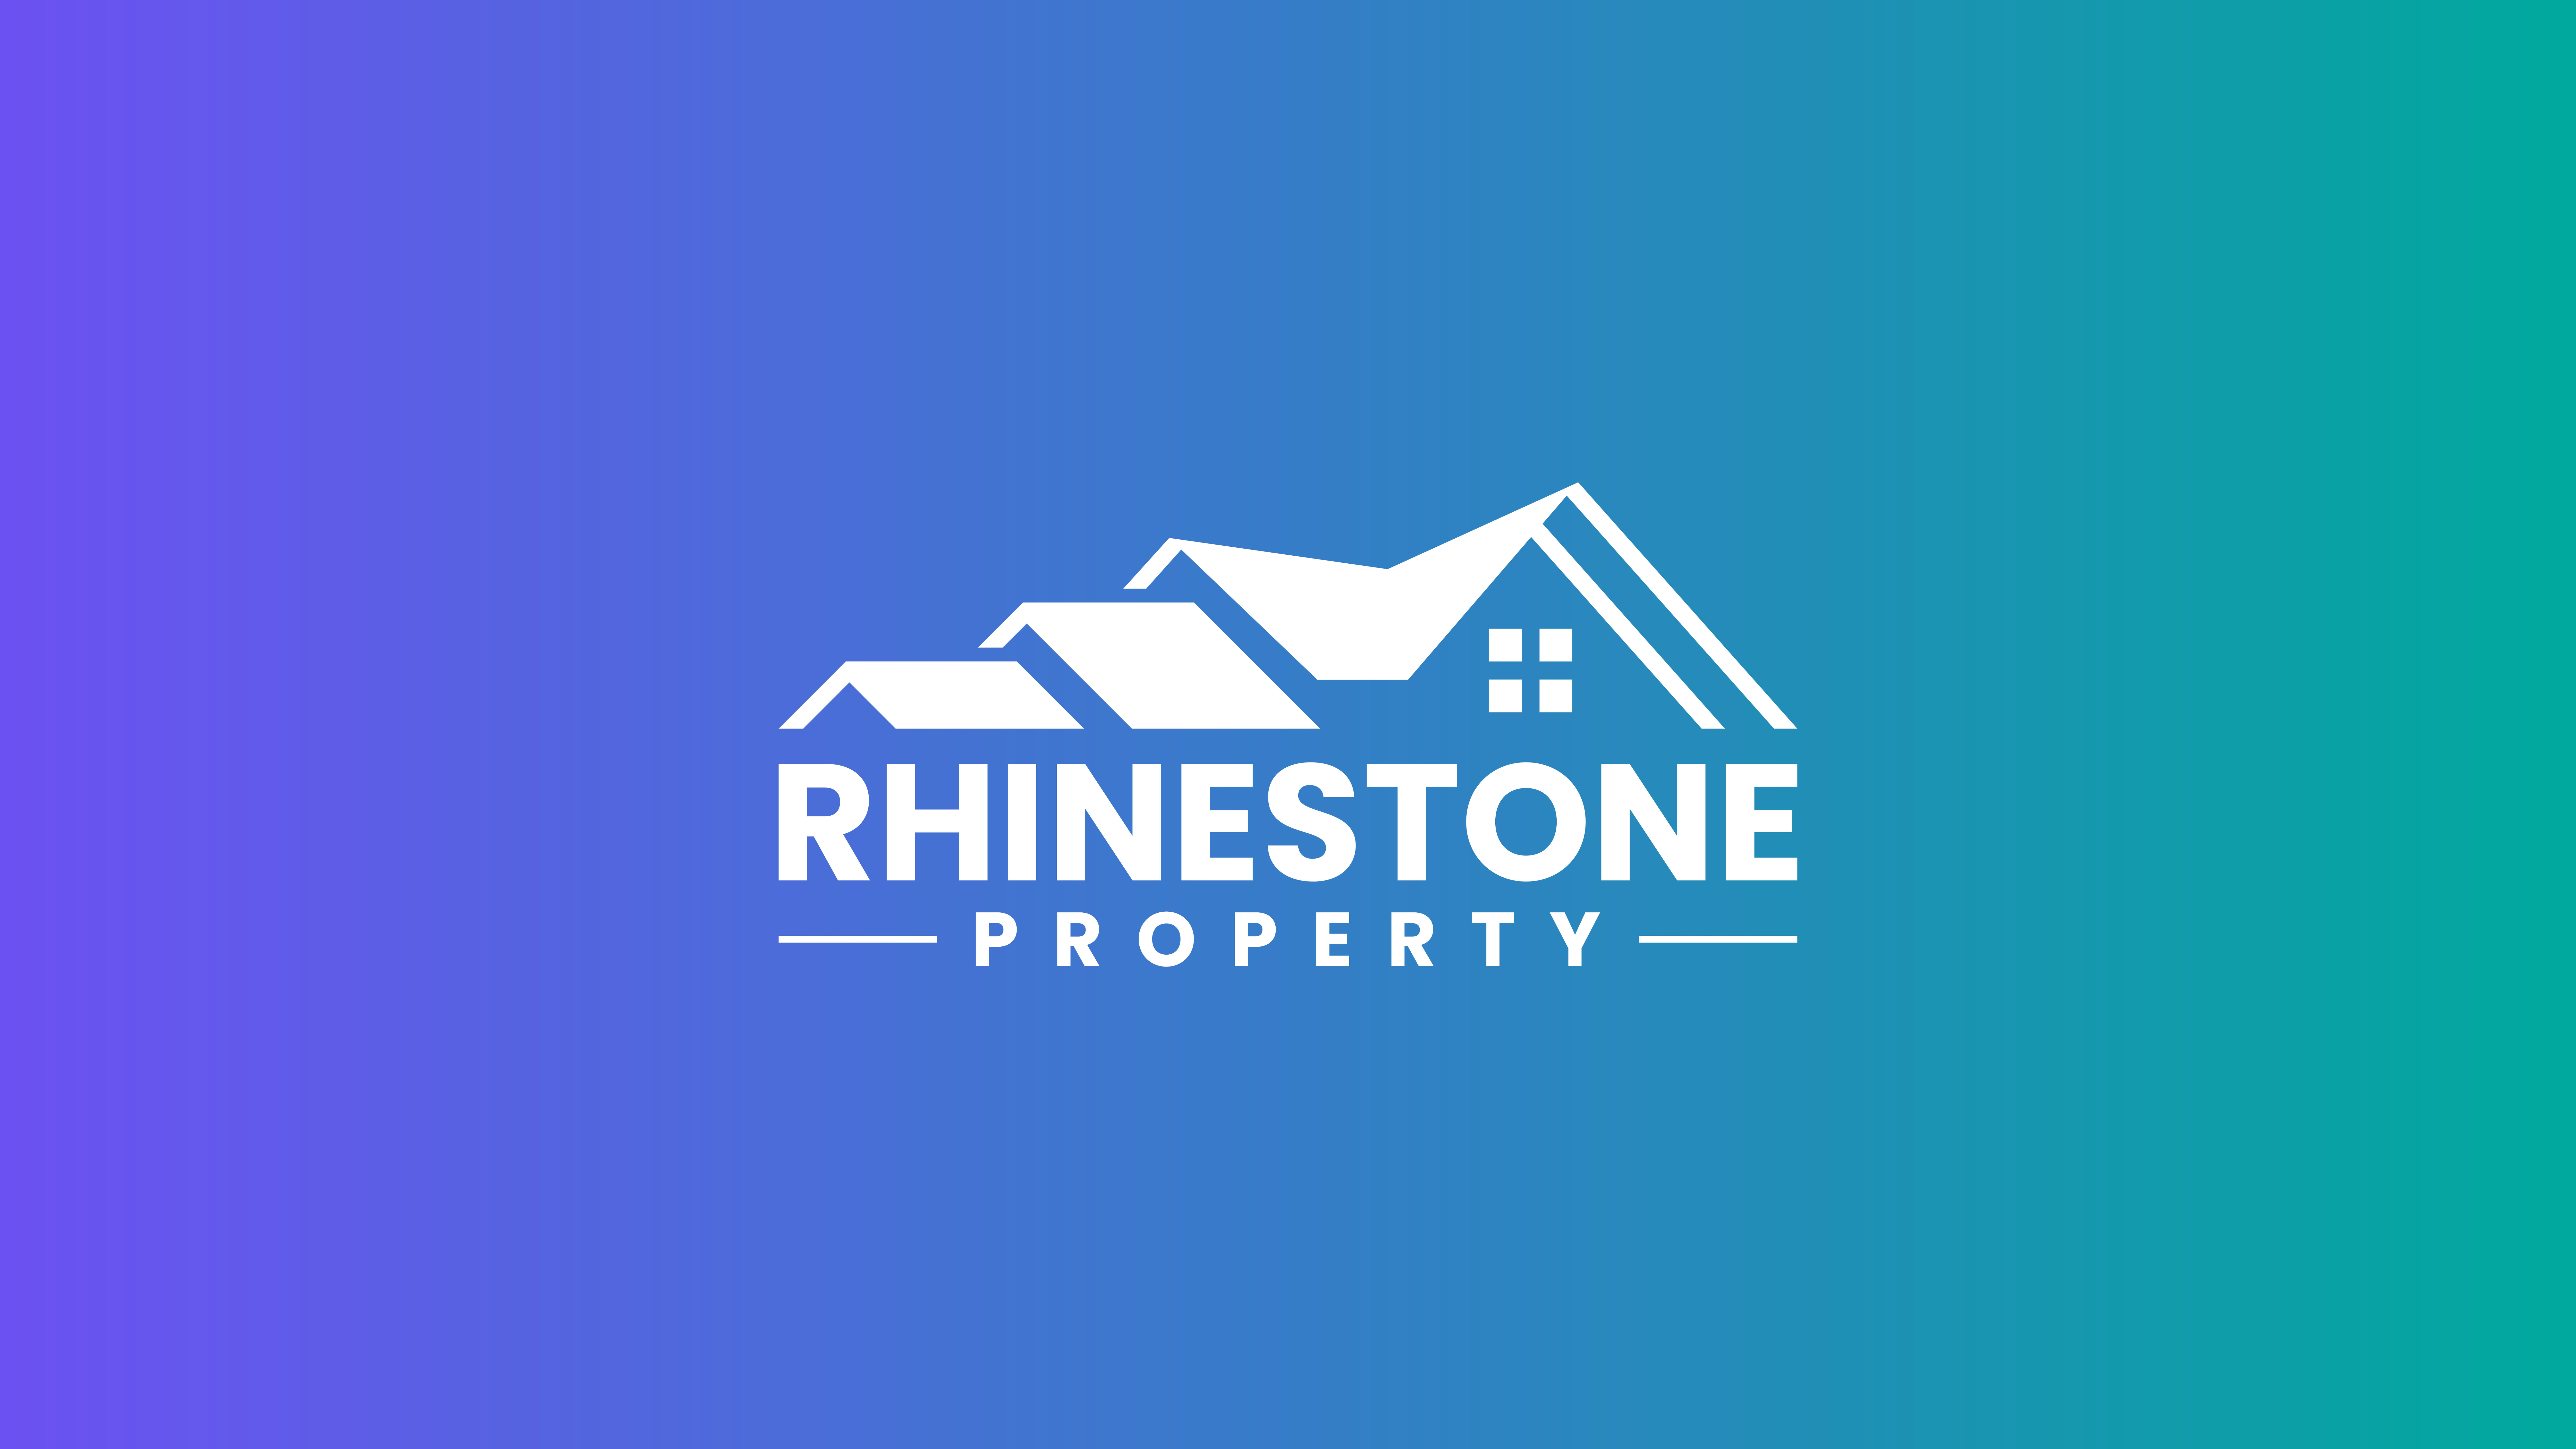 Rhinestone Property